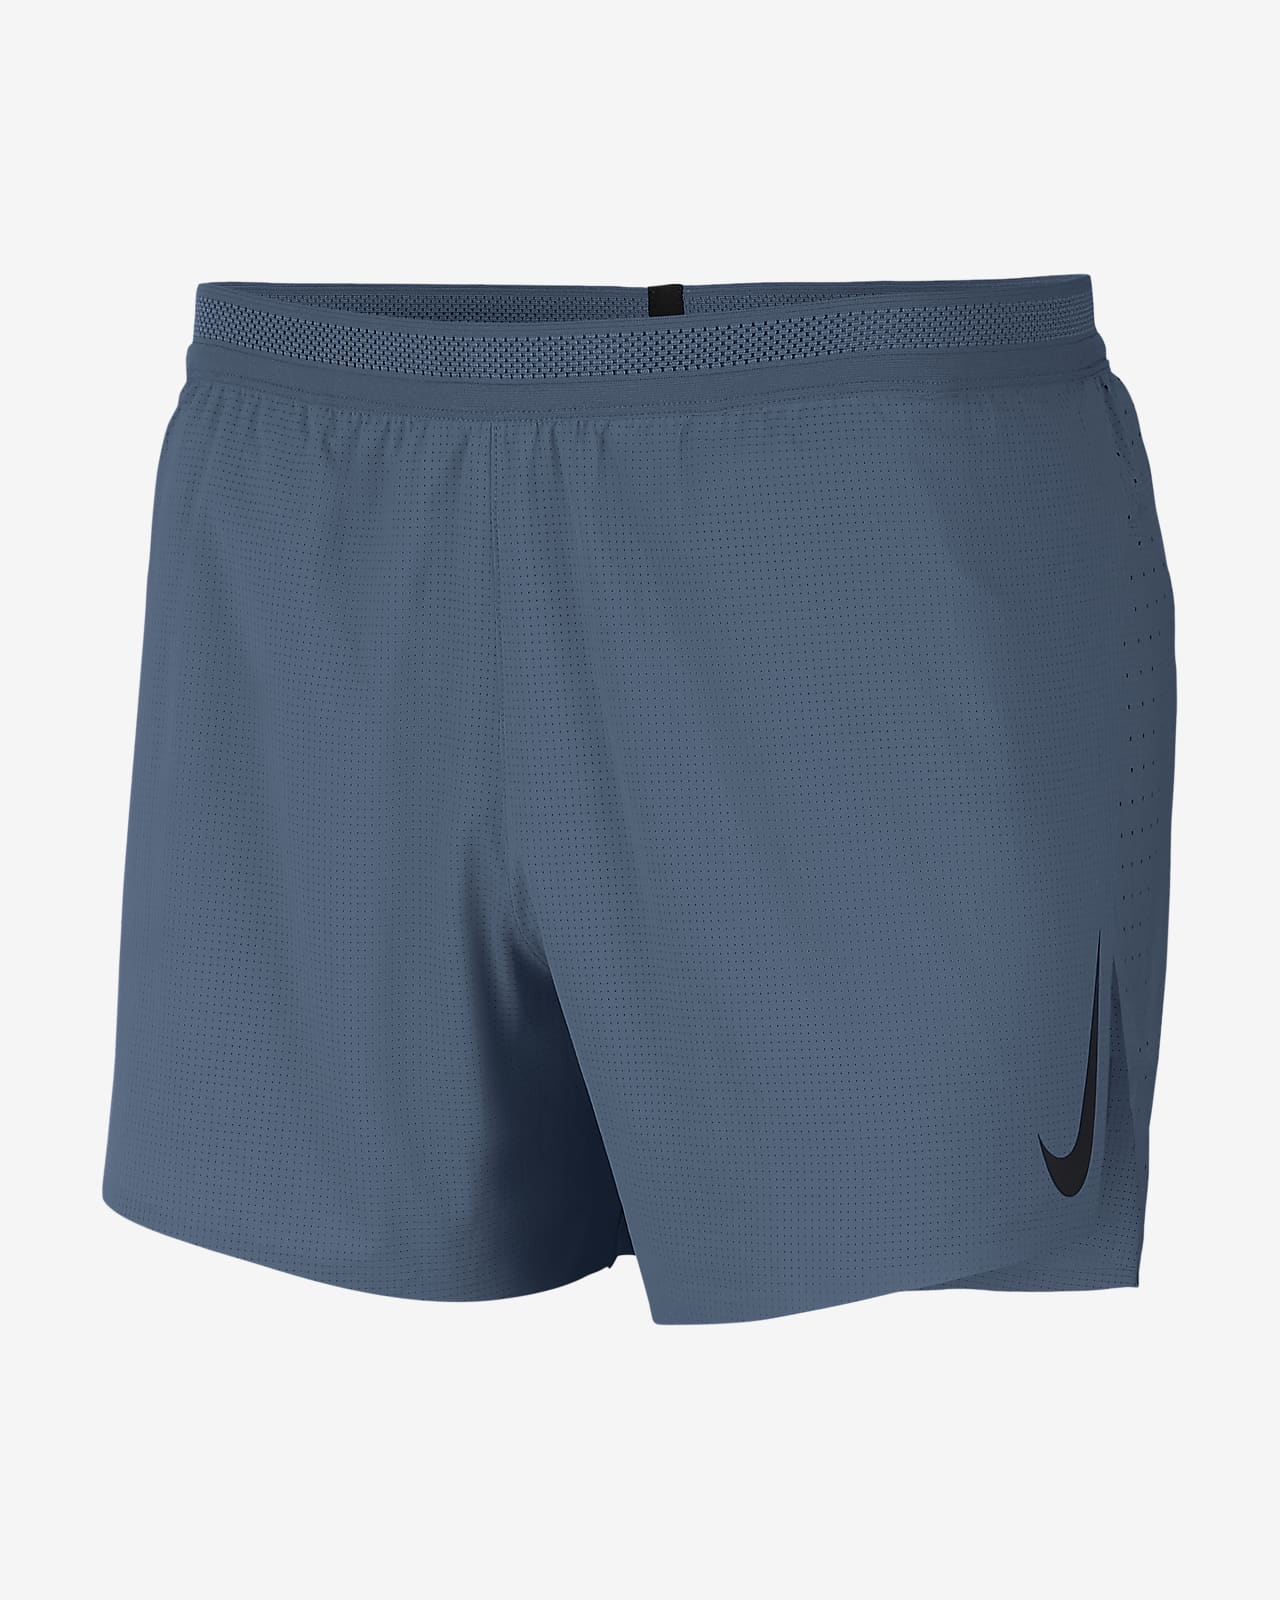 10cm approx.) Running Shorts. Nike NL